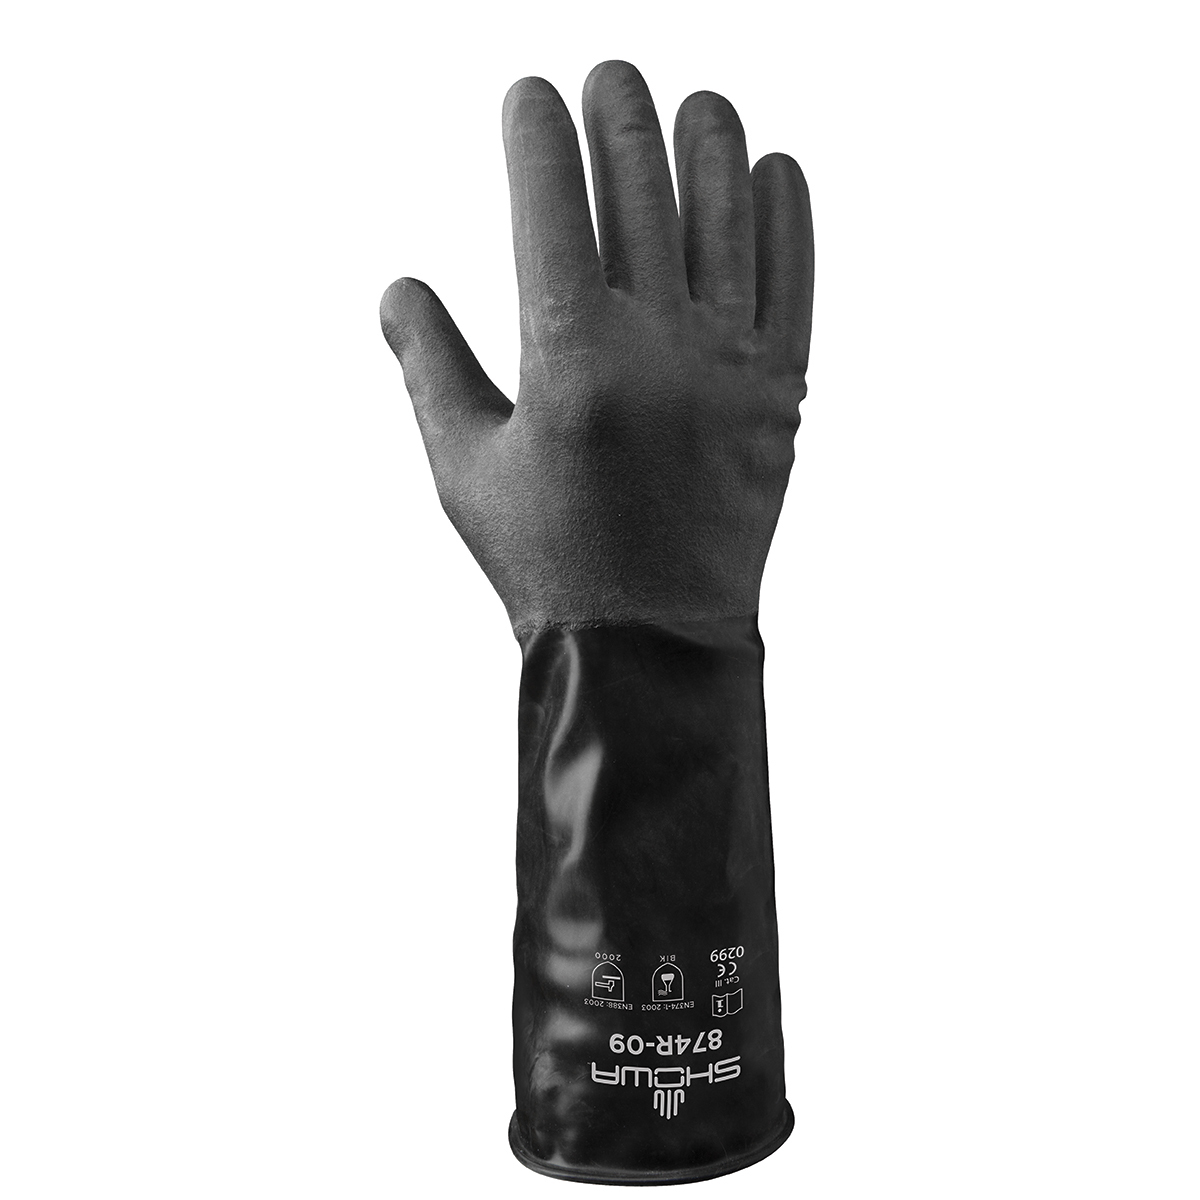 SHOWA® Black 14 mil Butyl Chemical Resistant Gloves